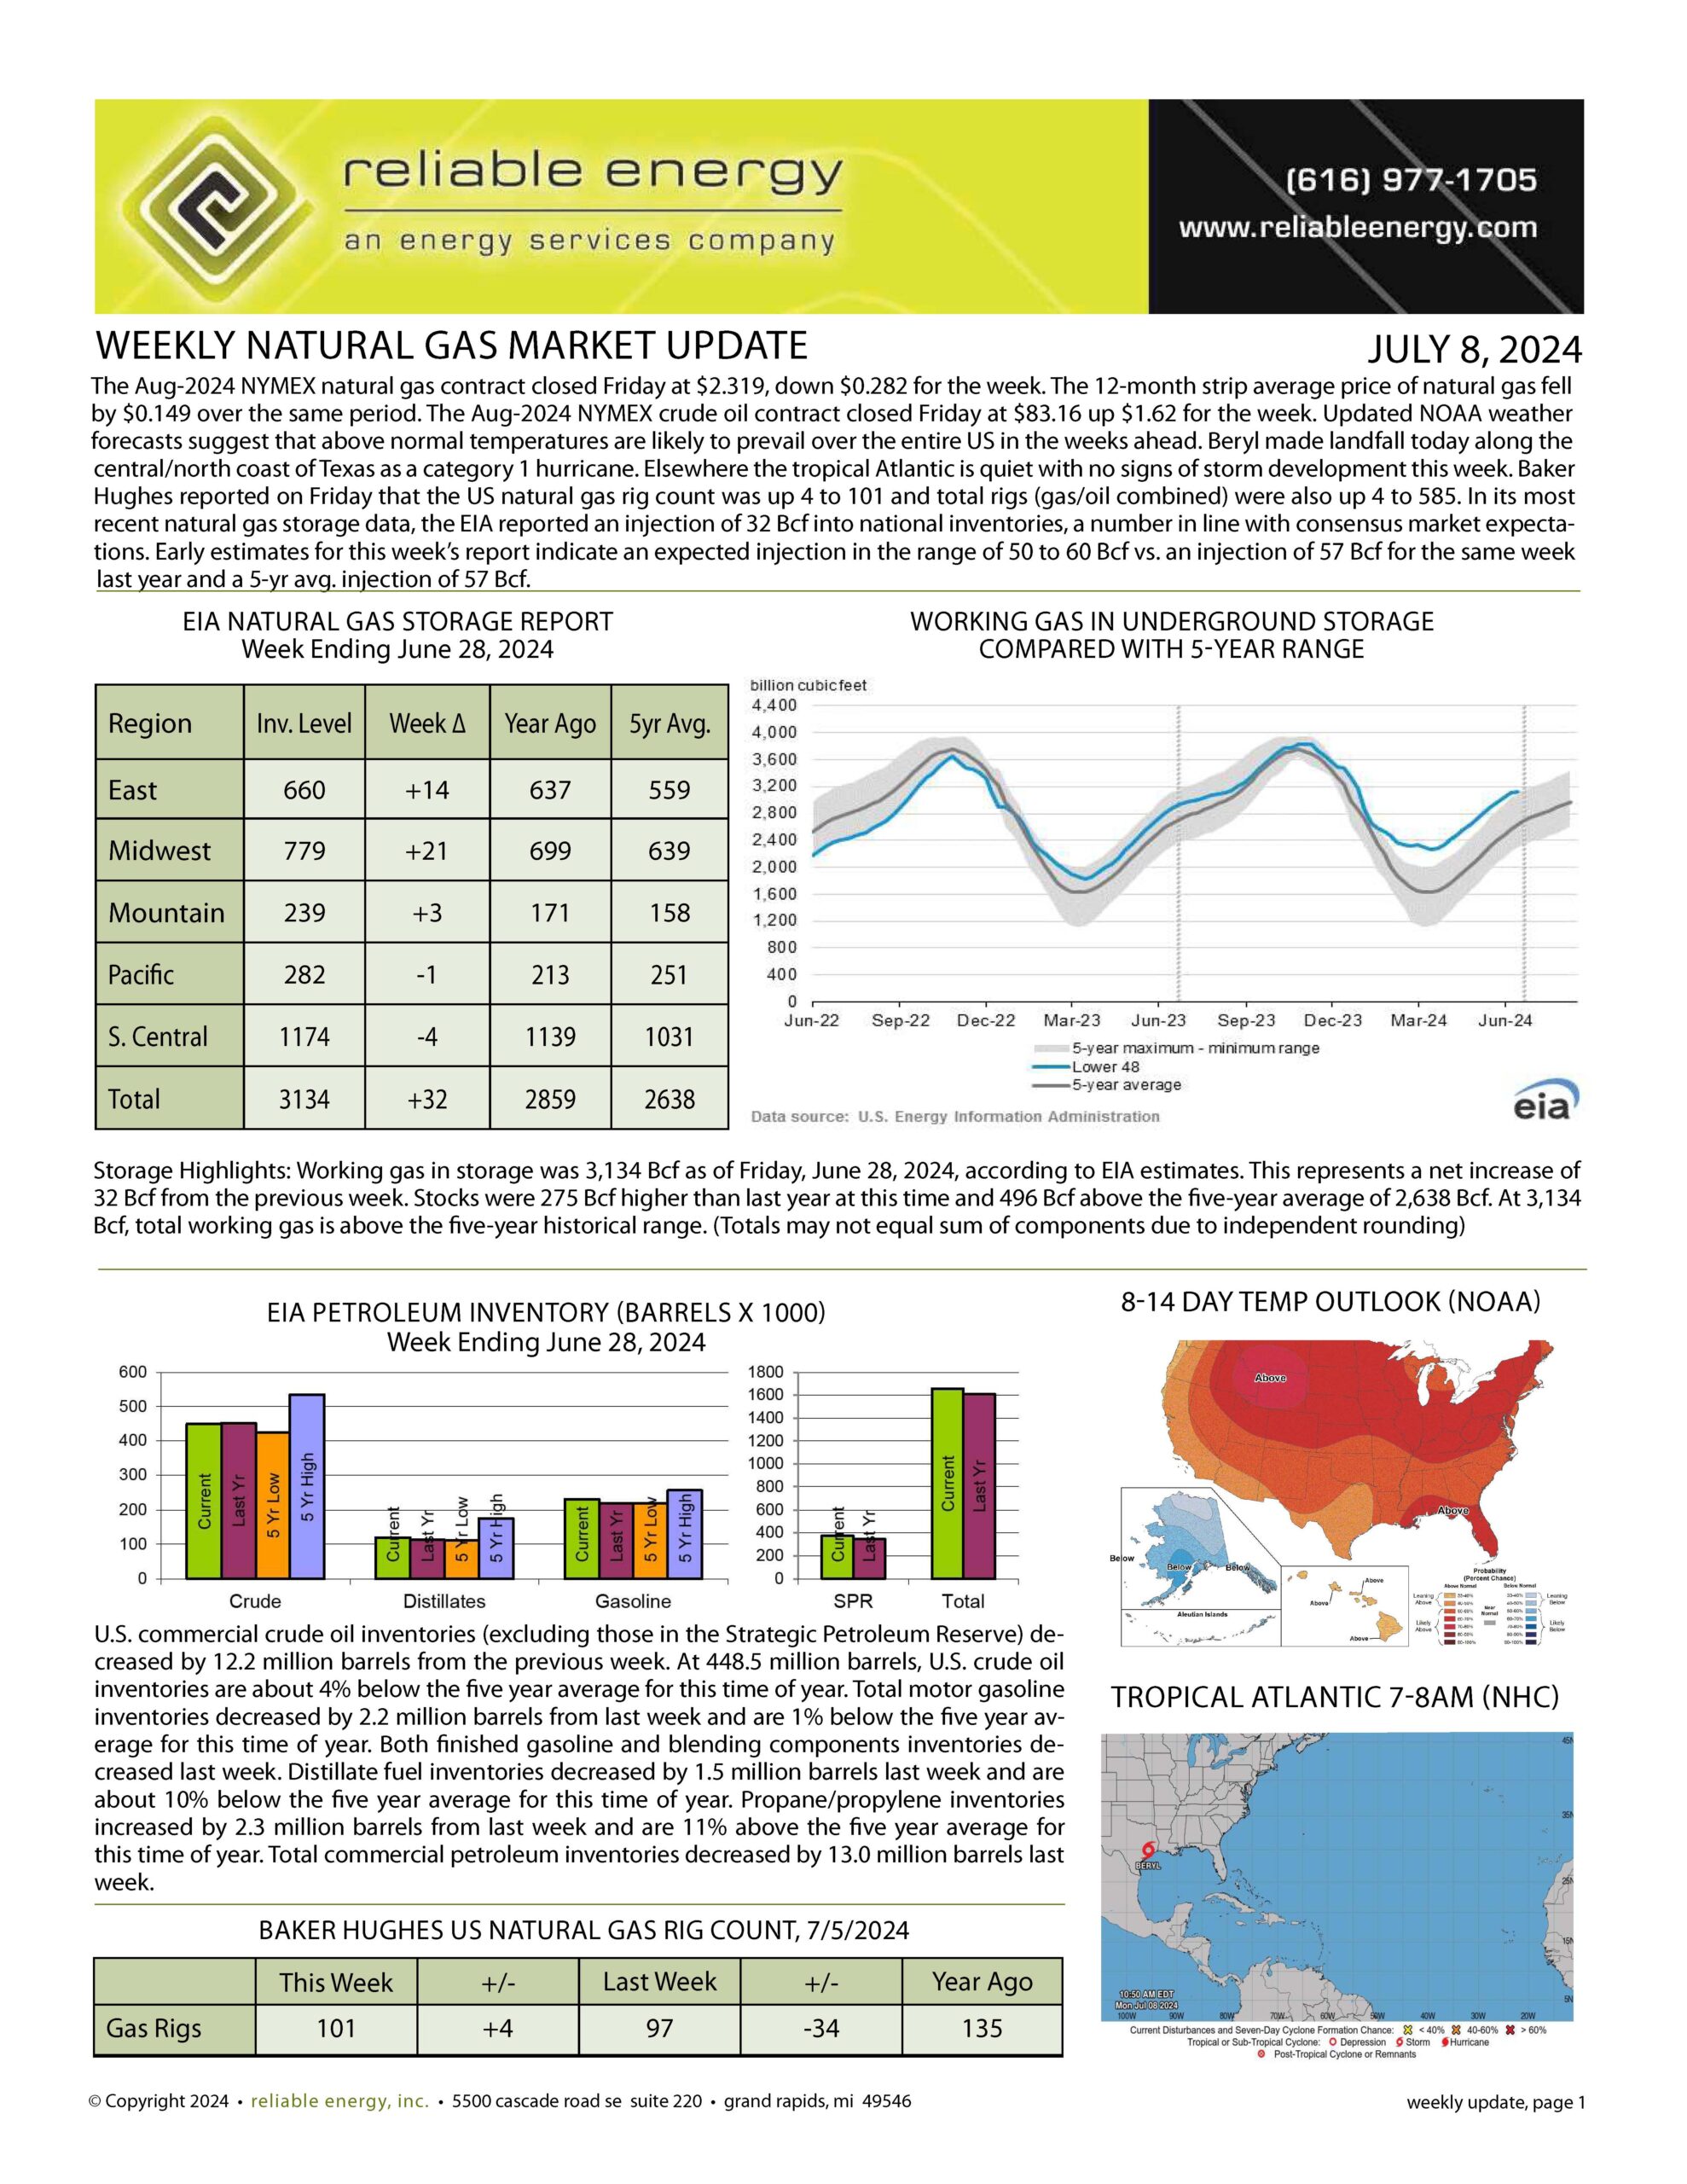 Natural Gas Market Update – July 8, 2024